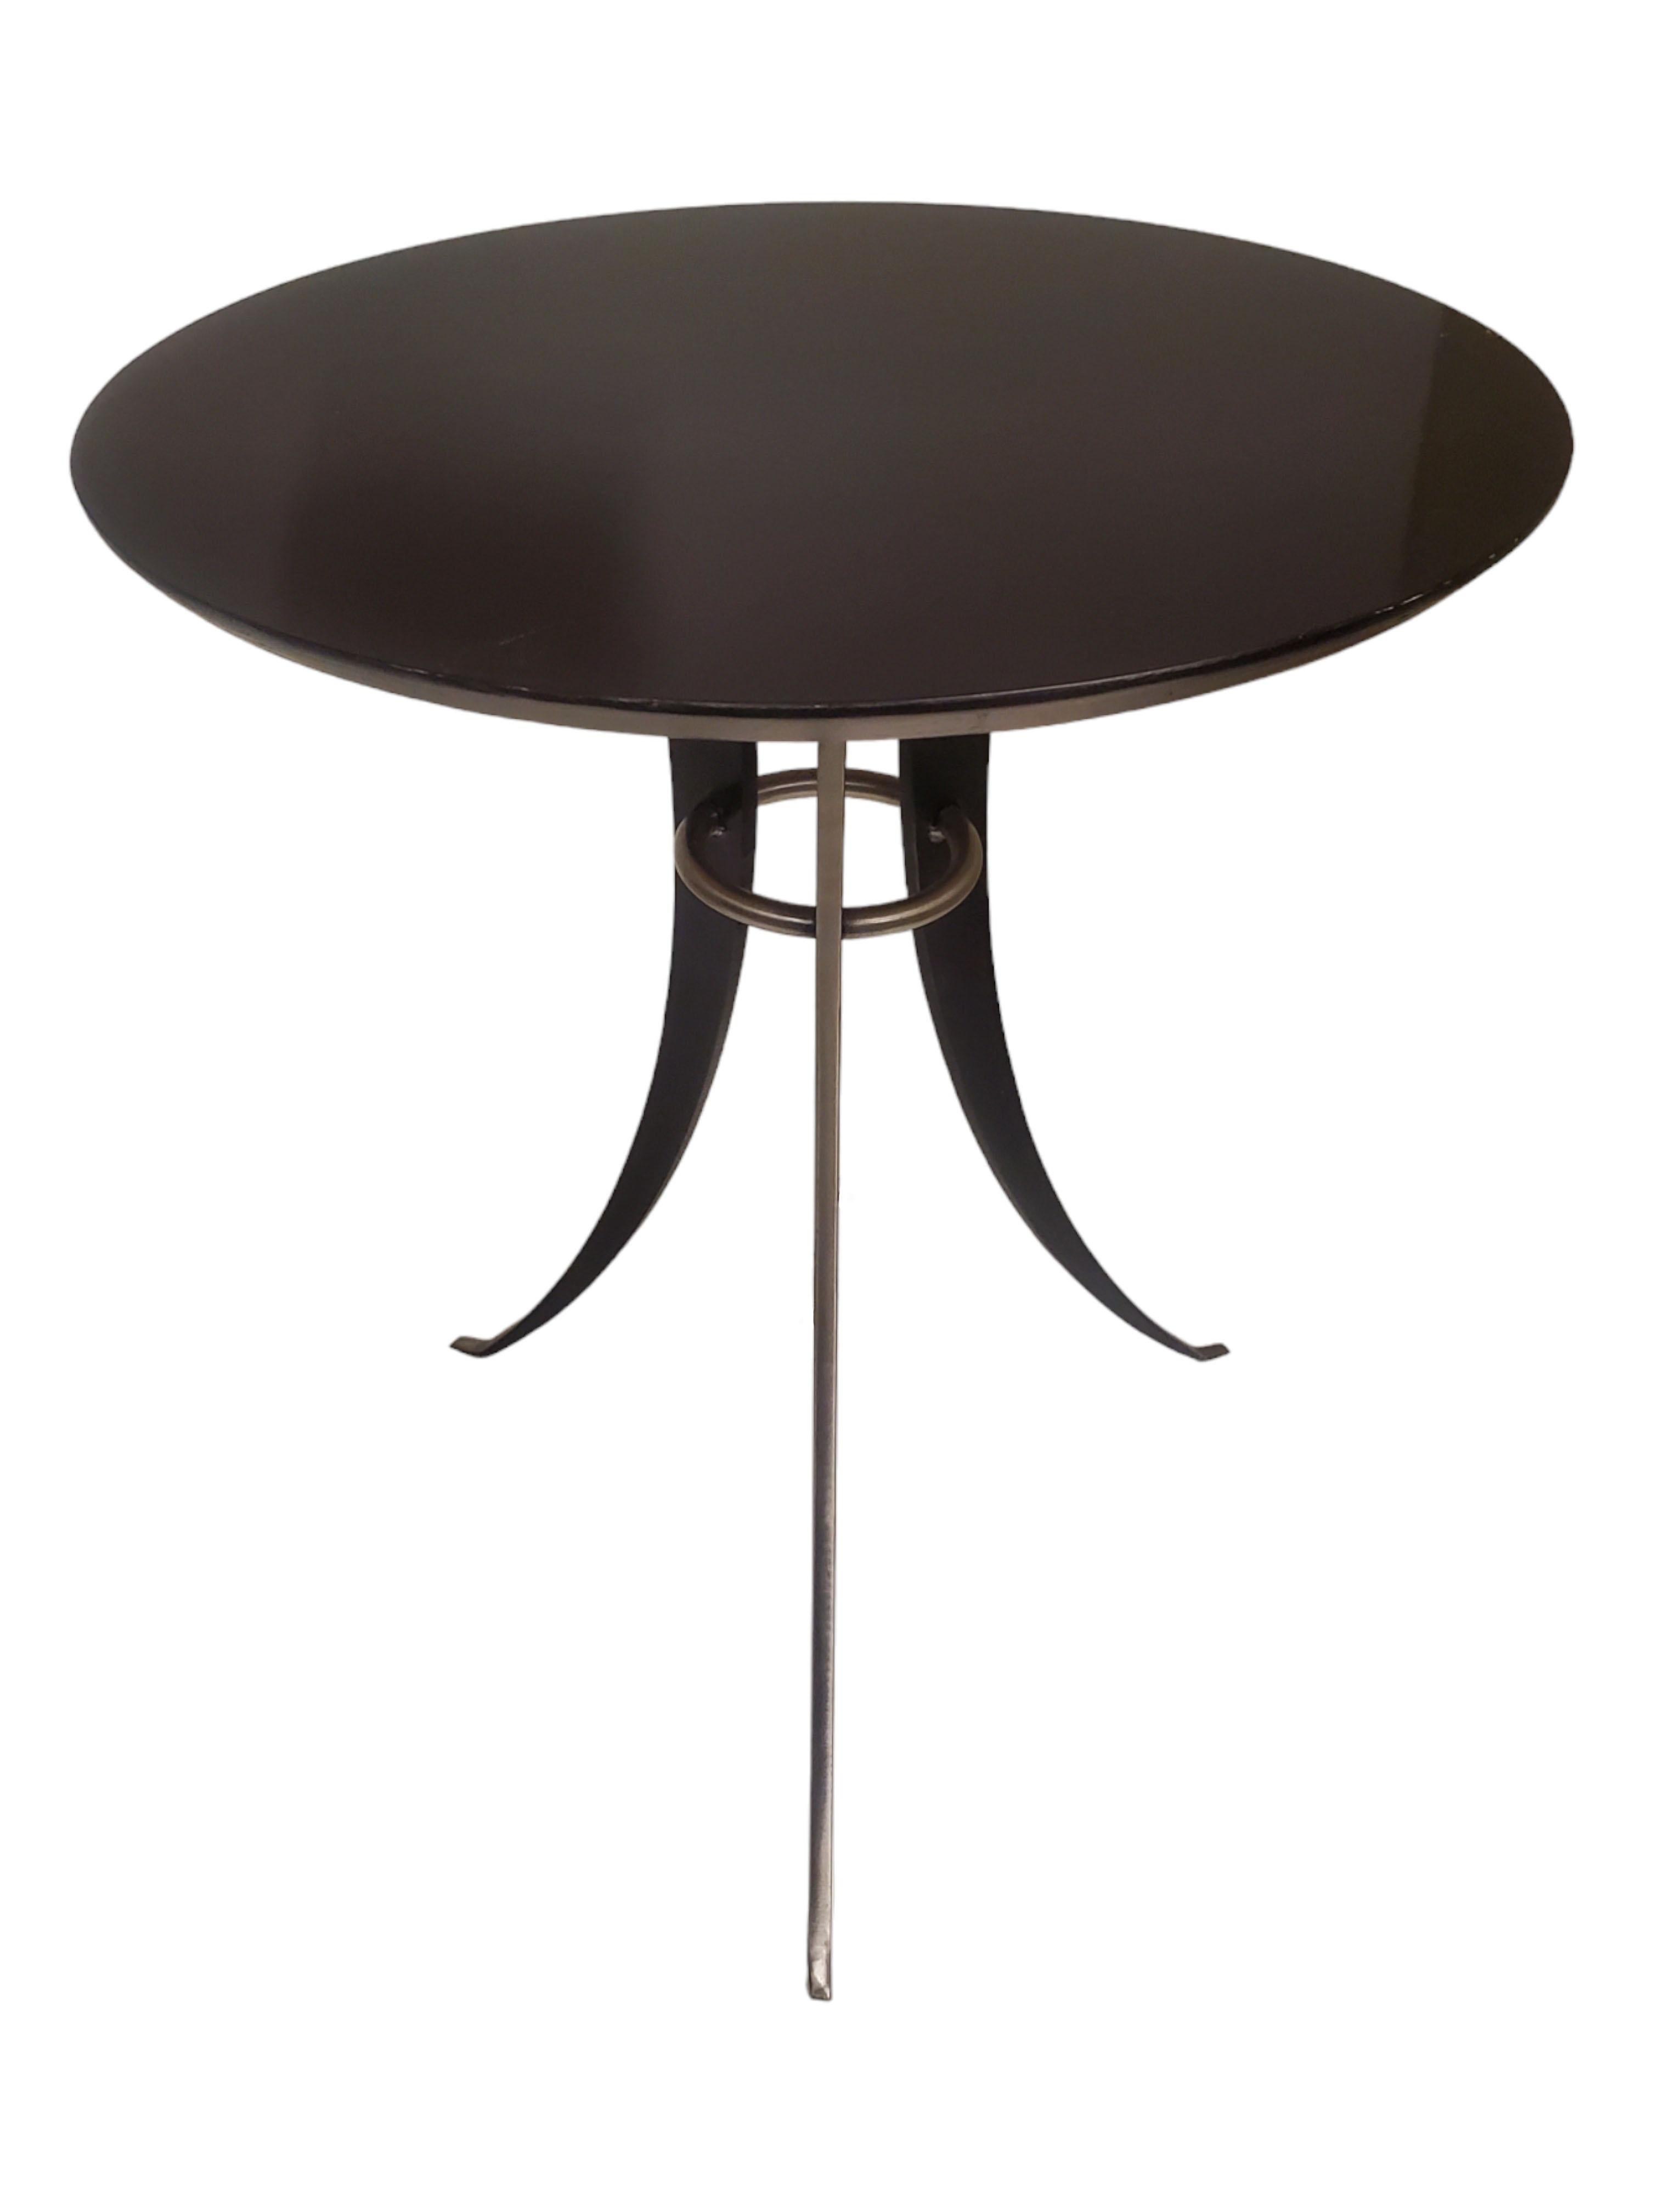 Minimalist Steel and Ebonized Wood Circular Table w/ tripodal legged base  For Sale 8